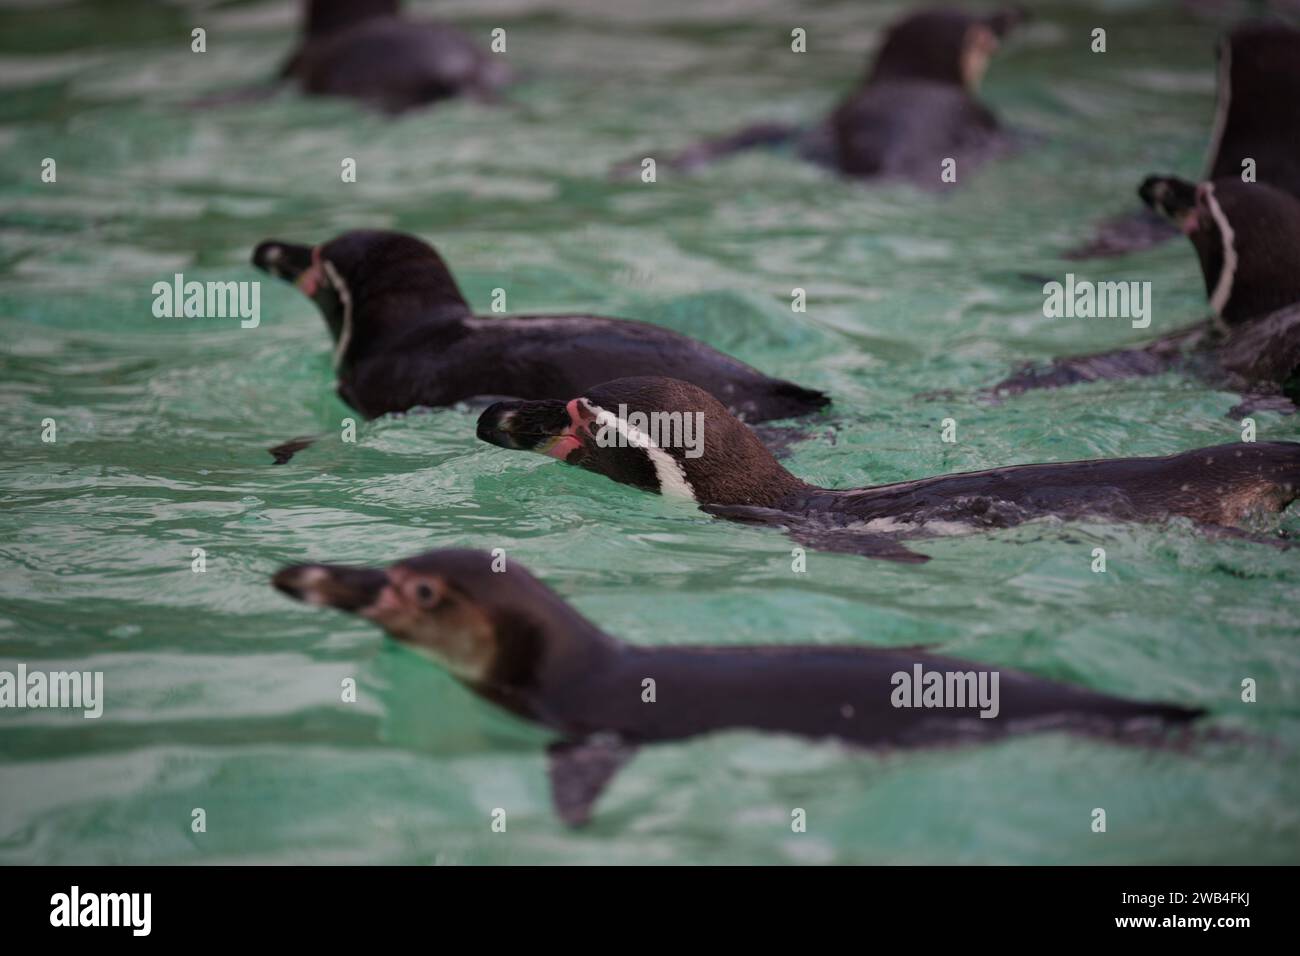 Humboldt penguins swimming at London Zoo Stock Photo